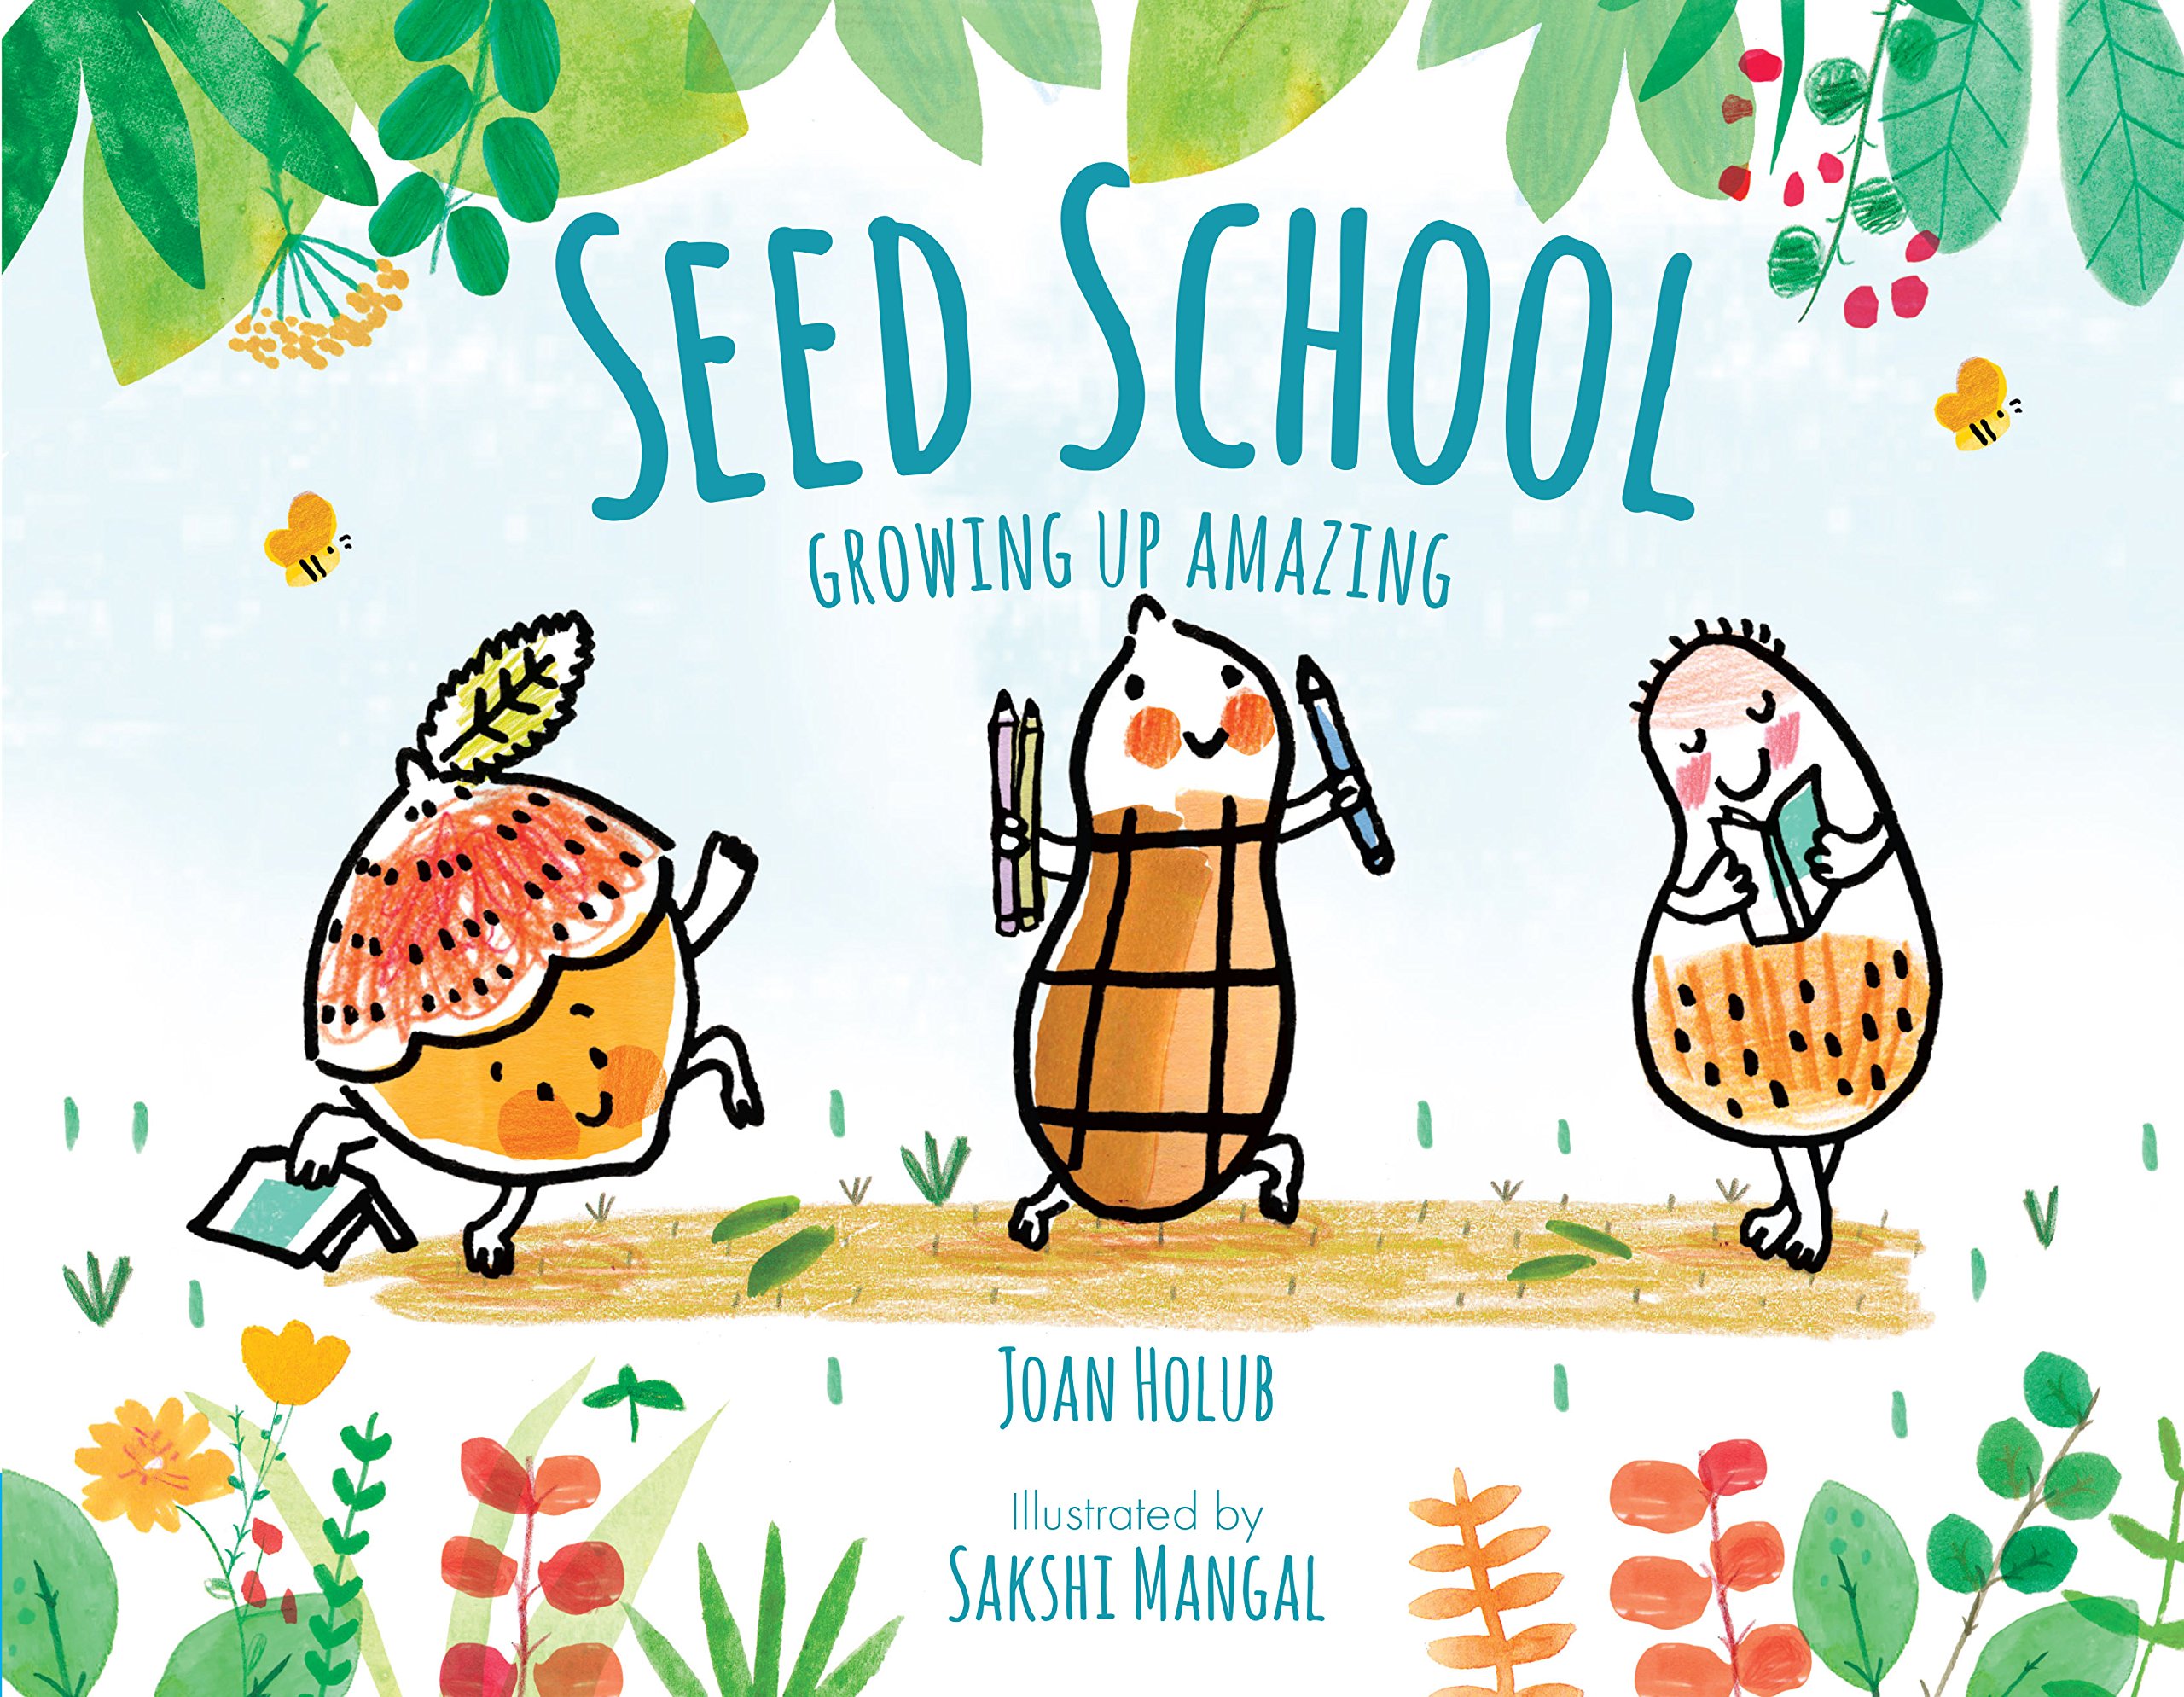 Seed School - Project Learning Tree